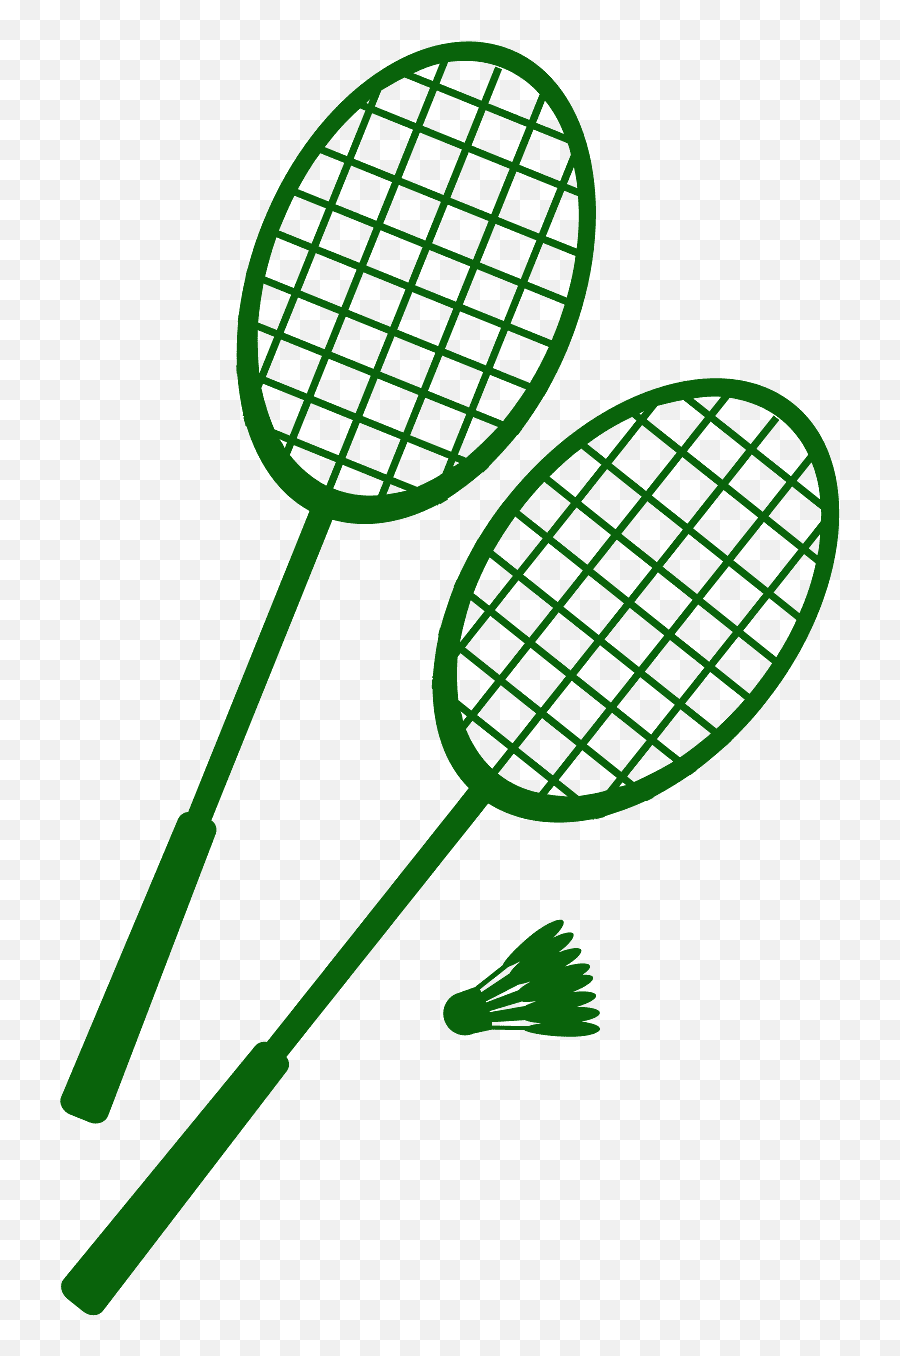 badminton silhouette png